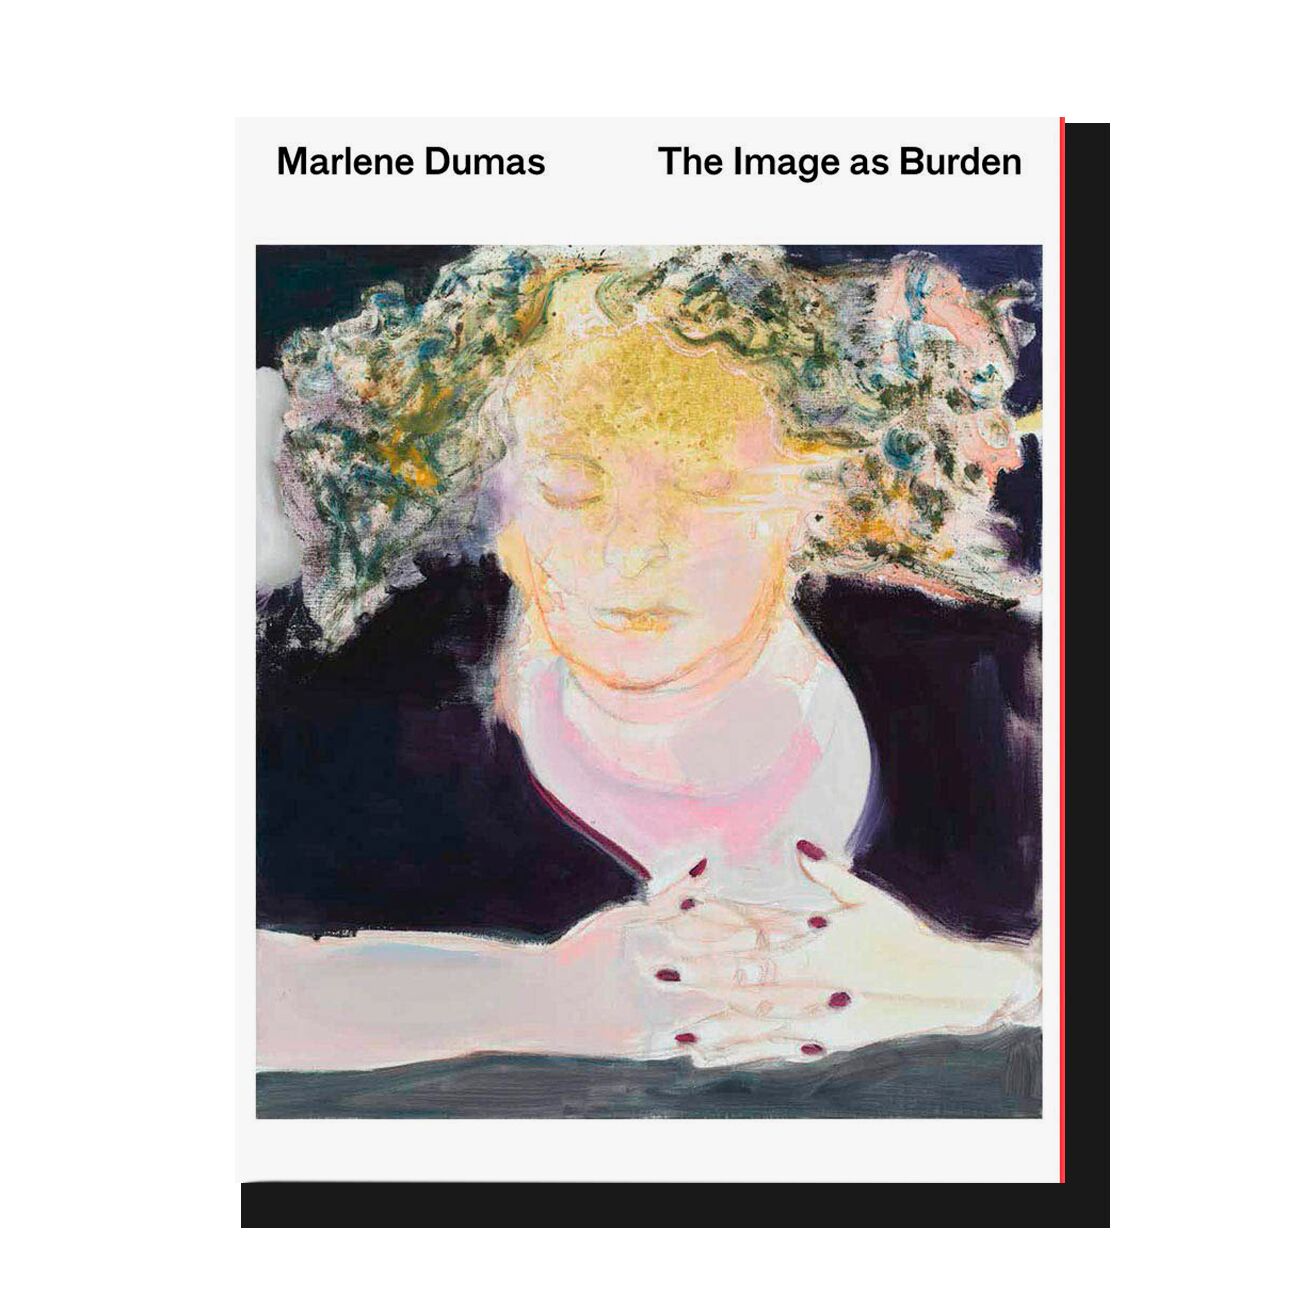 Marlene Dumas: The Image as Burden